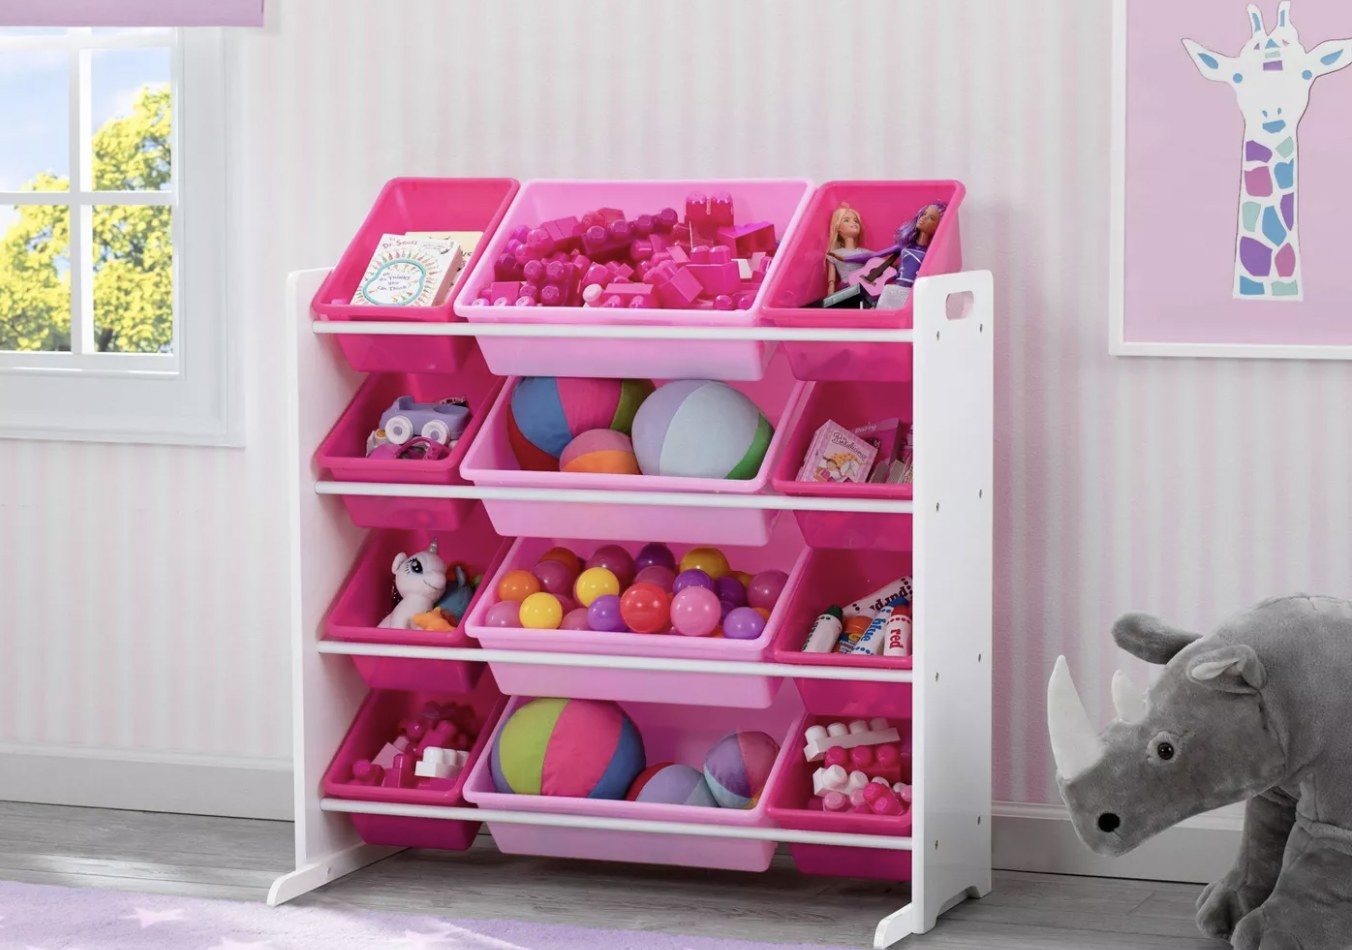 Pink toy storage system with bins